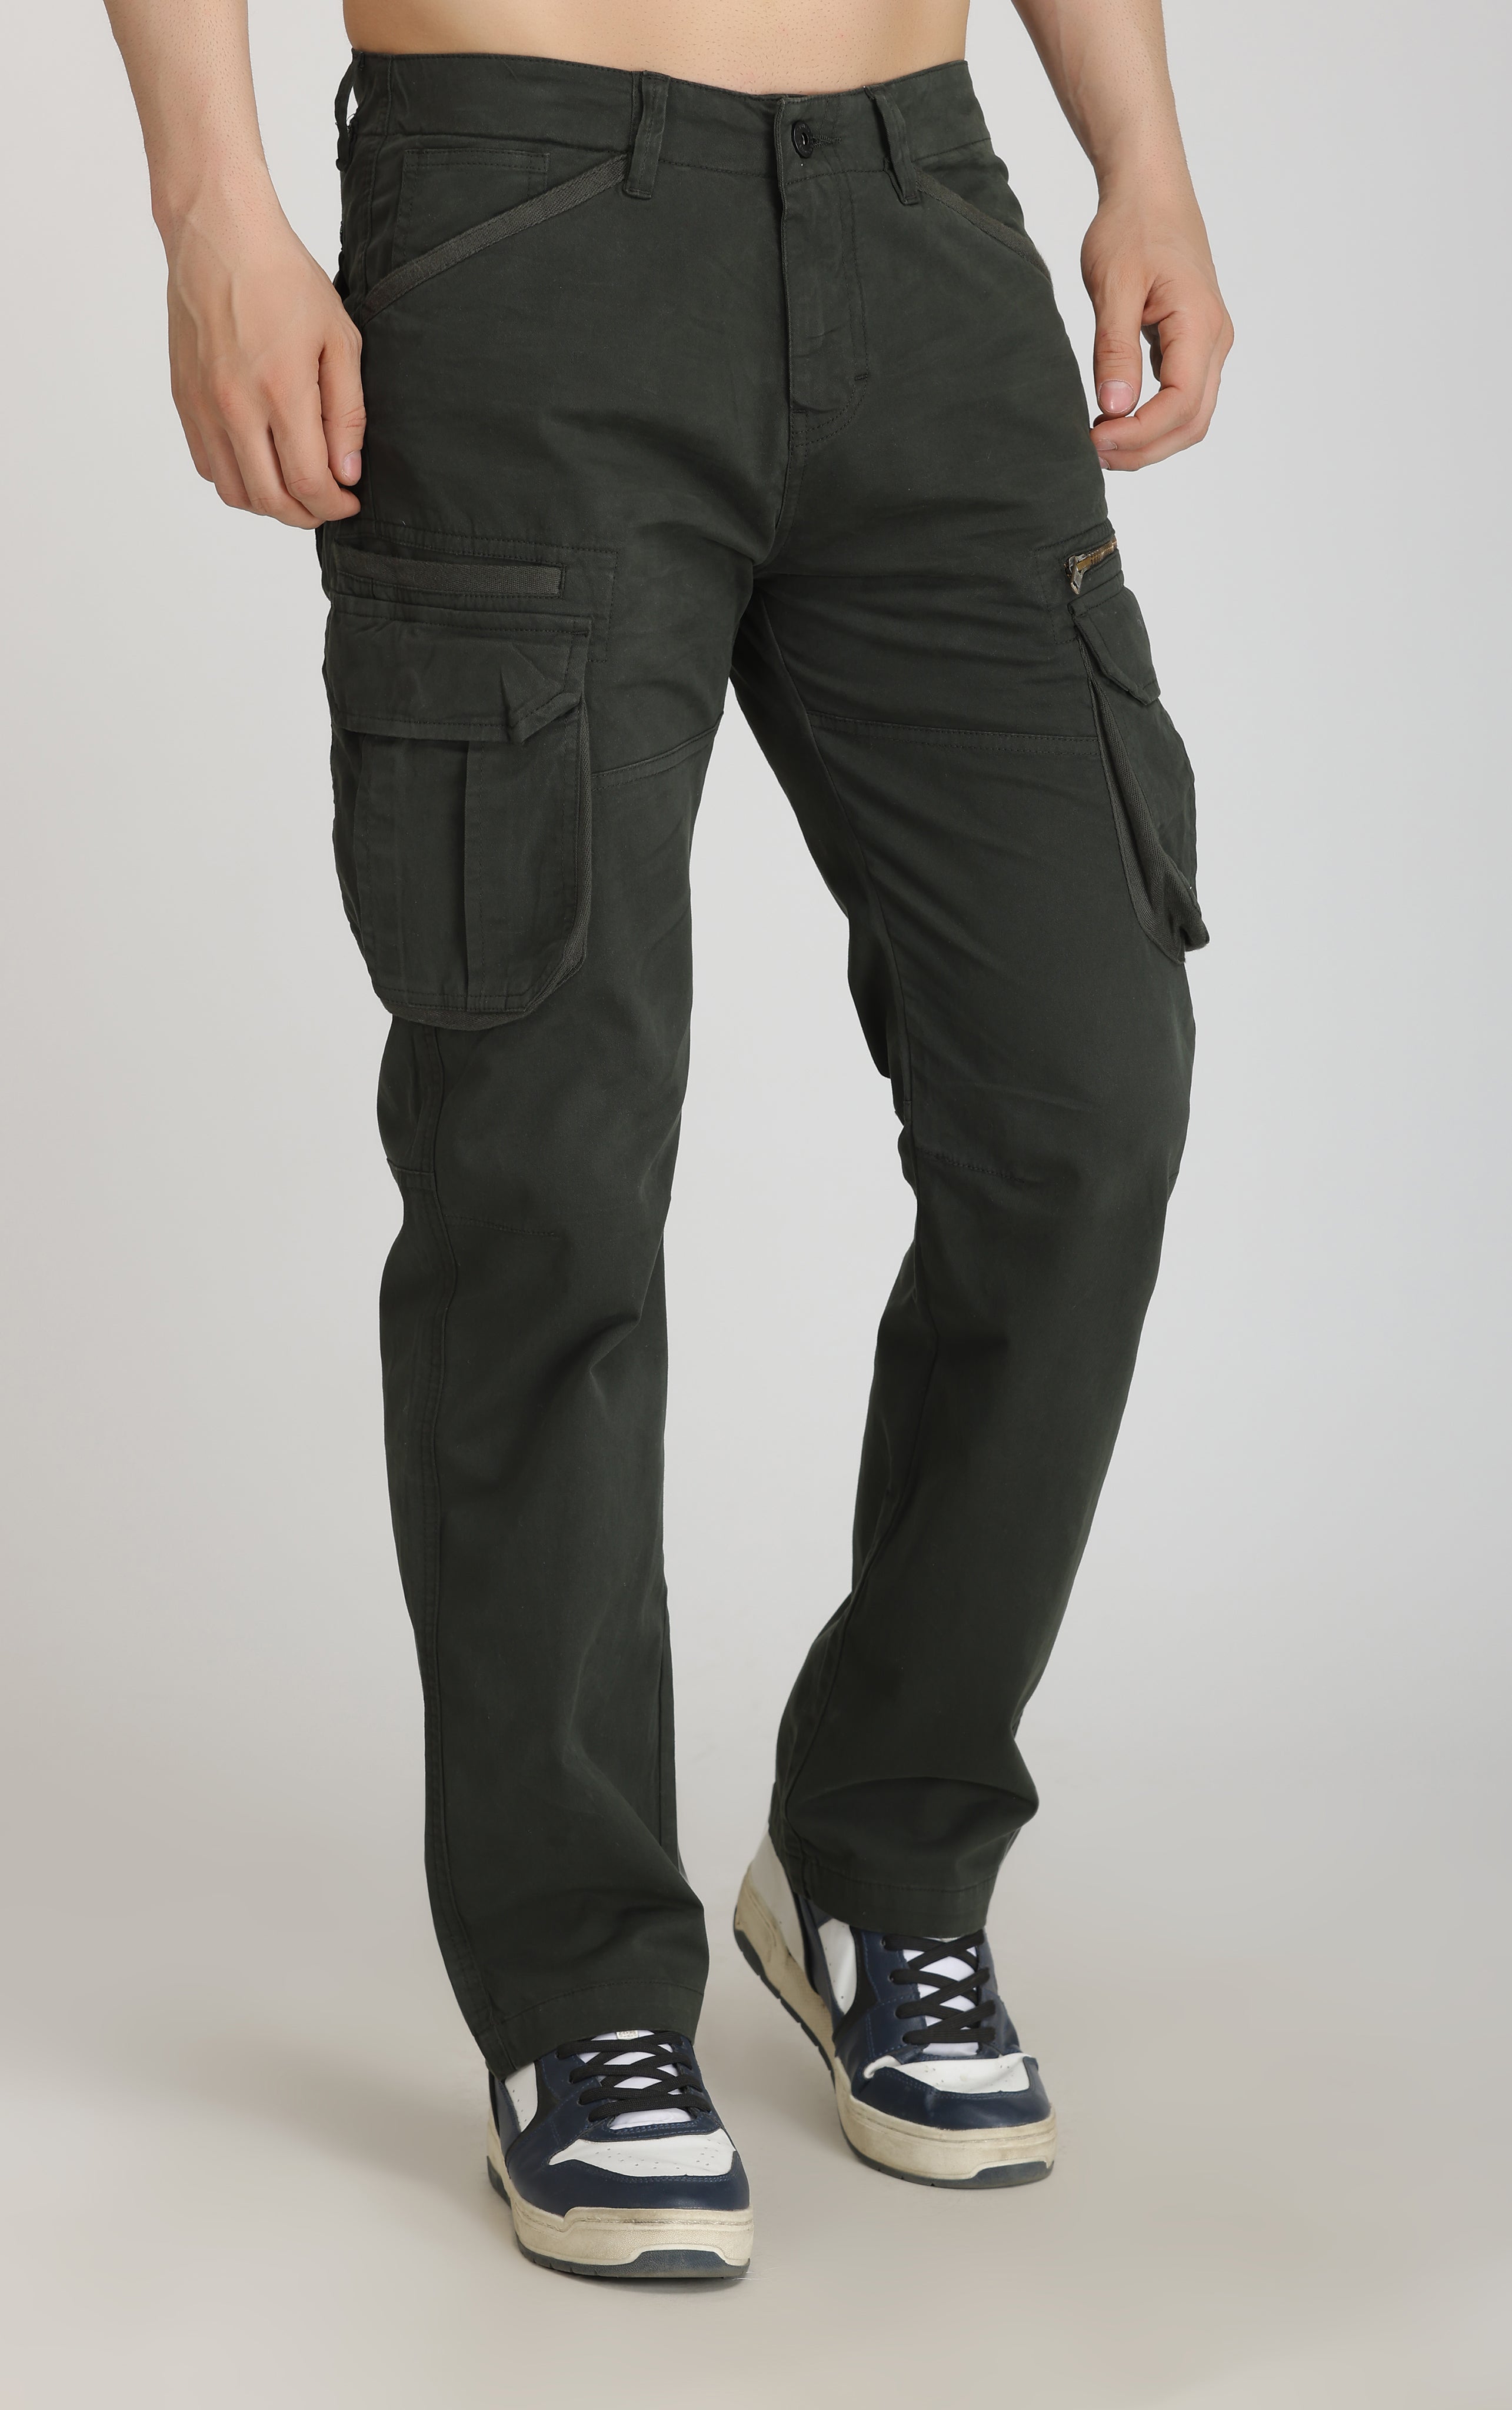 Buy Mens Streetwear 8 Pocket Cargo Pants Olive Green Online in India - Etsy